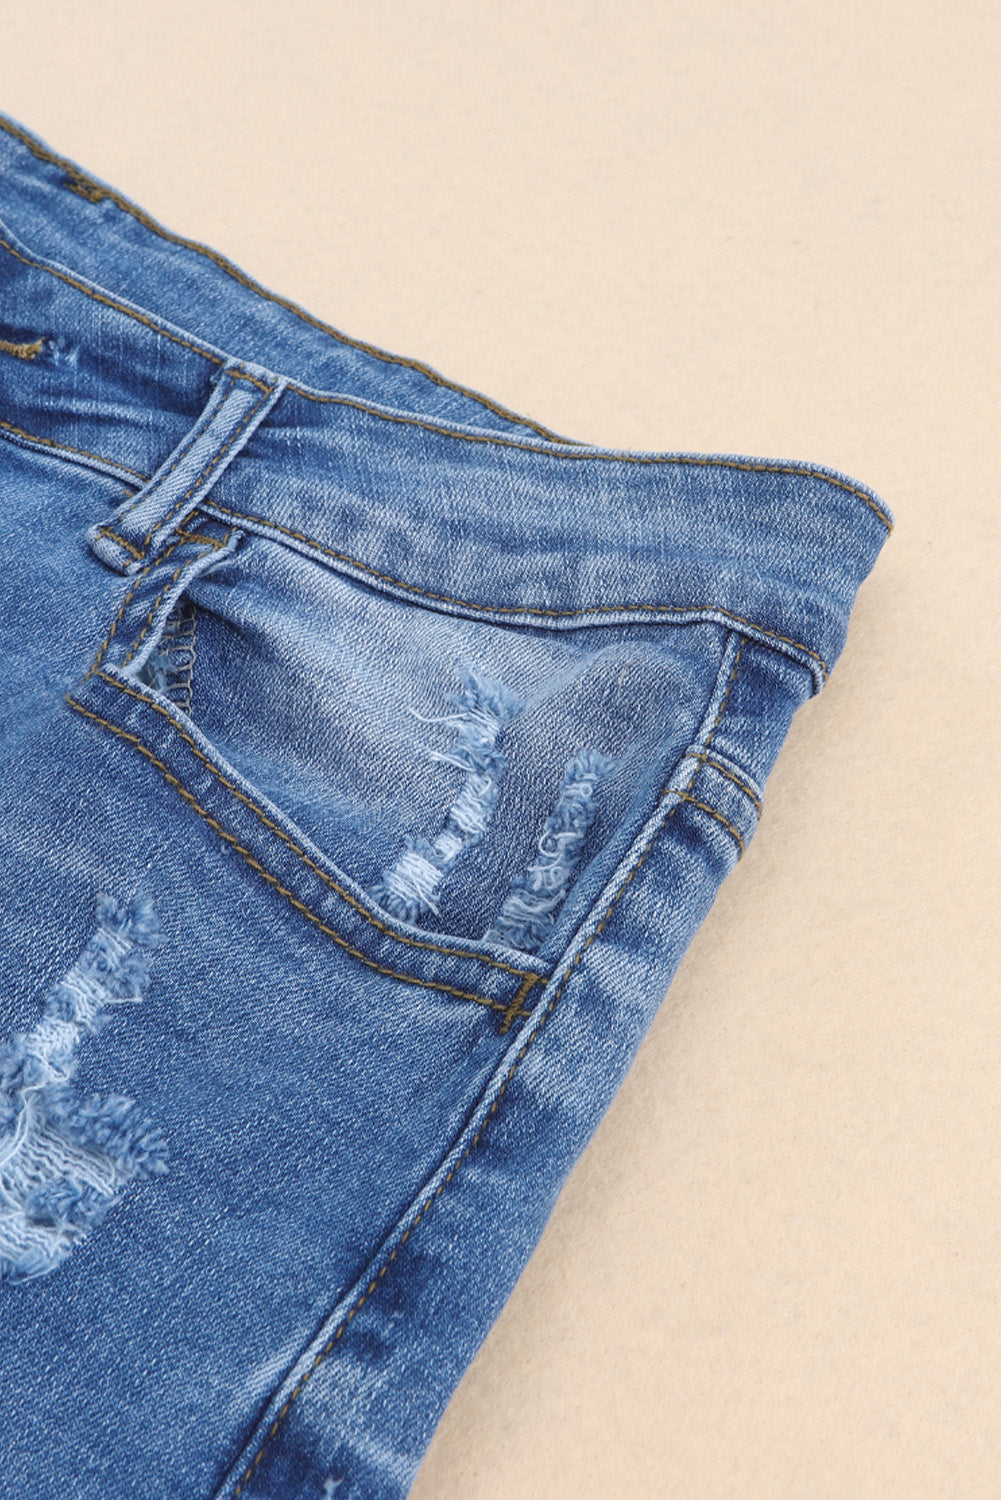 Vintage Distressed High Waist Pocket Denim Shorts